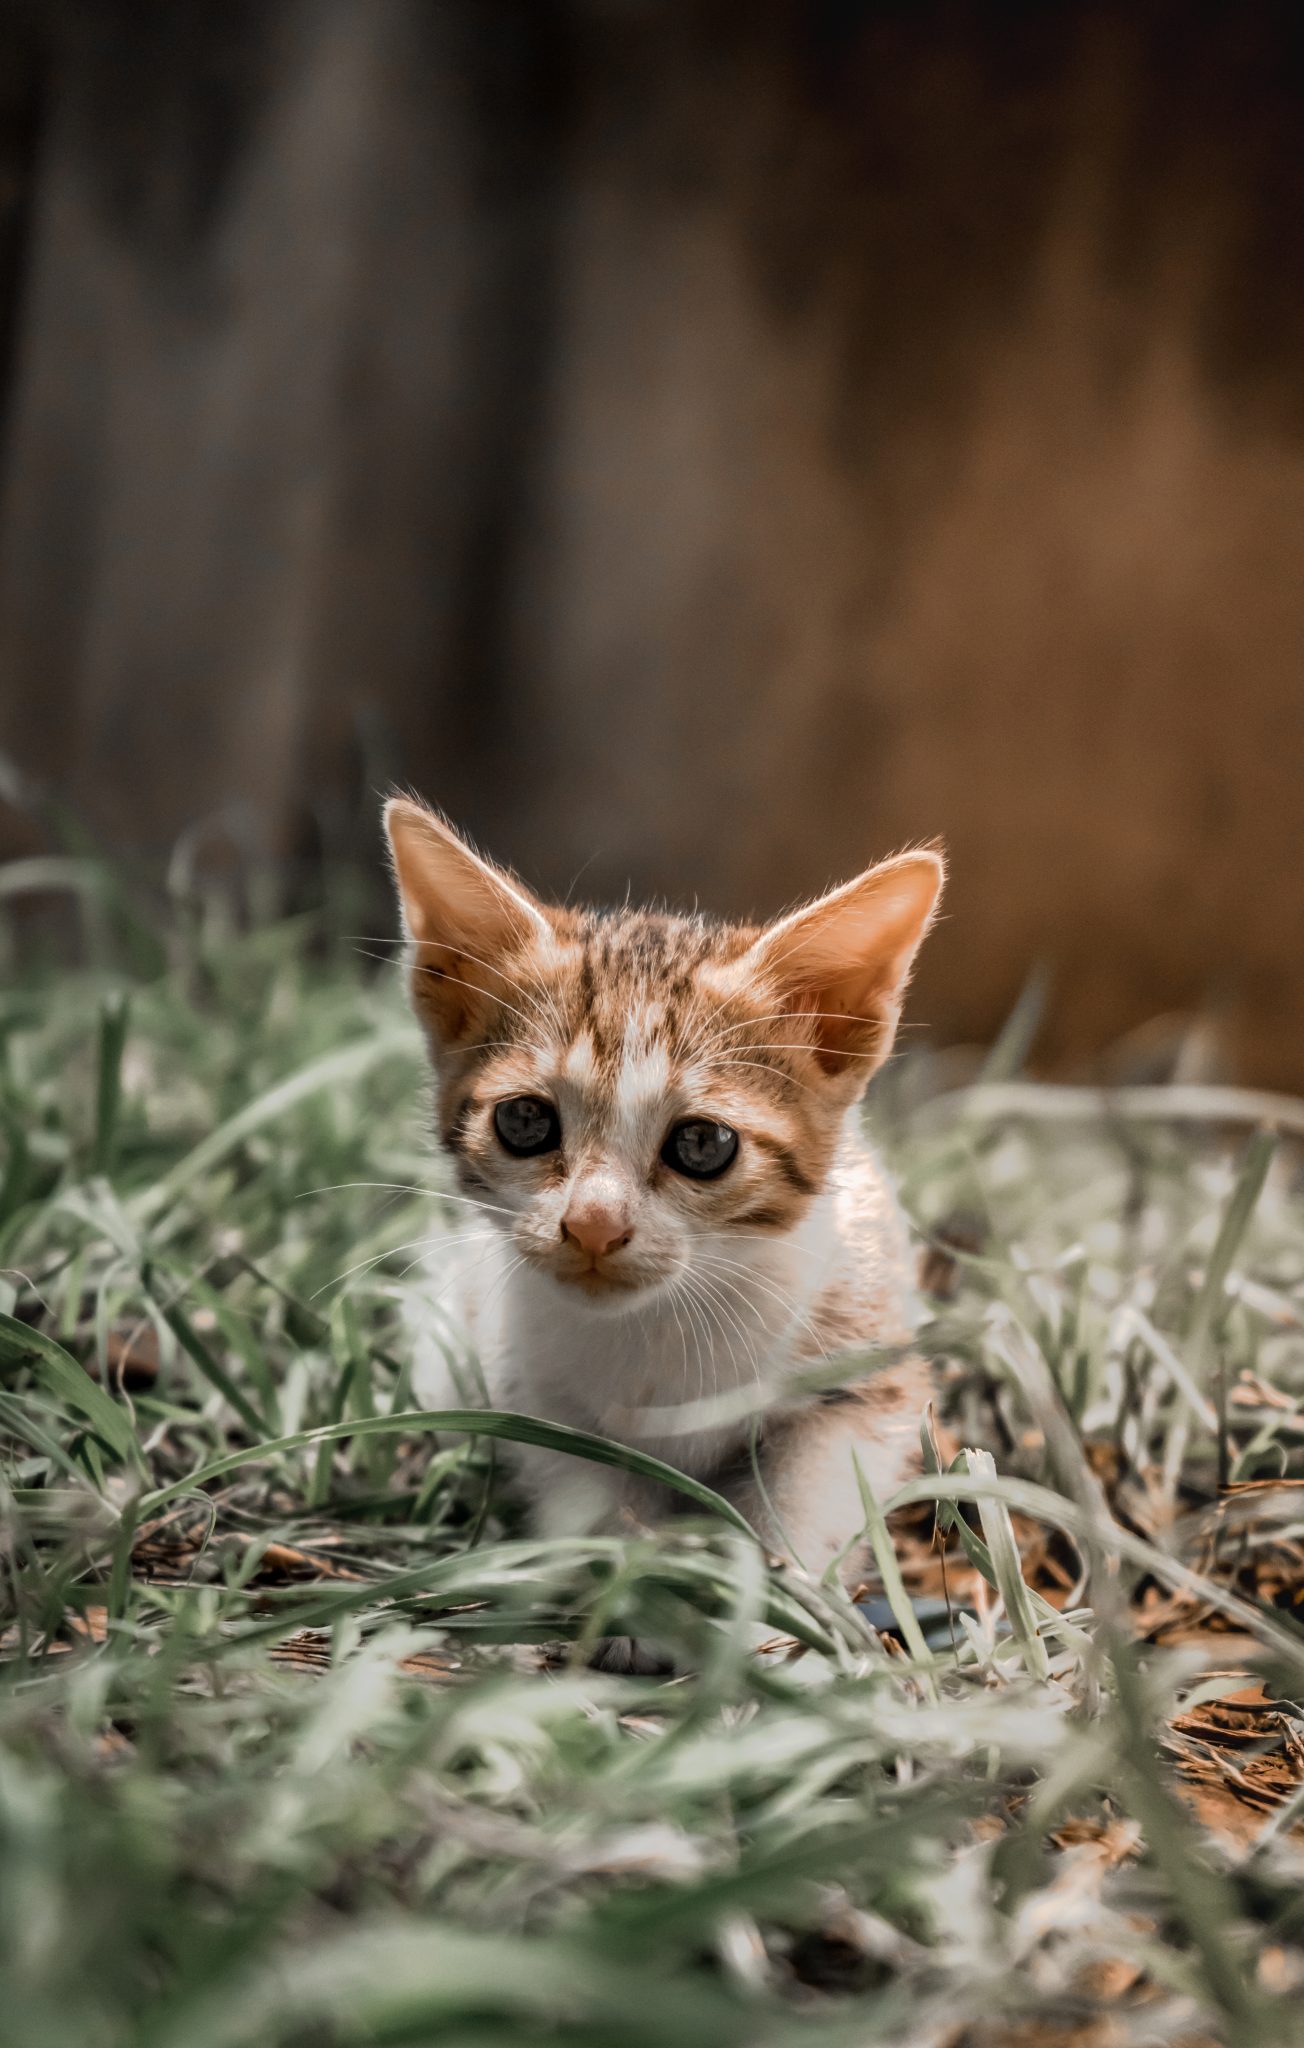 Cute tiny little cat enjoying on the grass